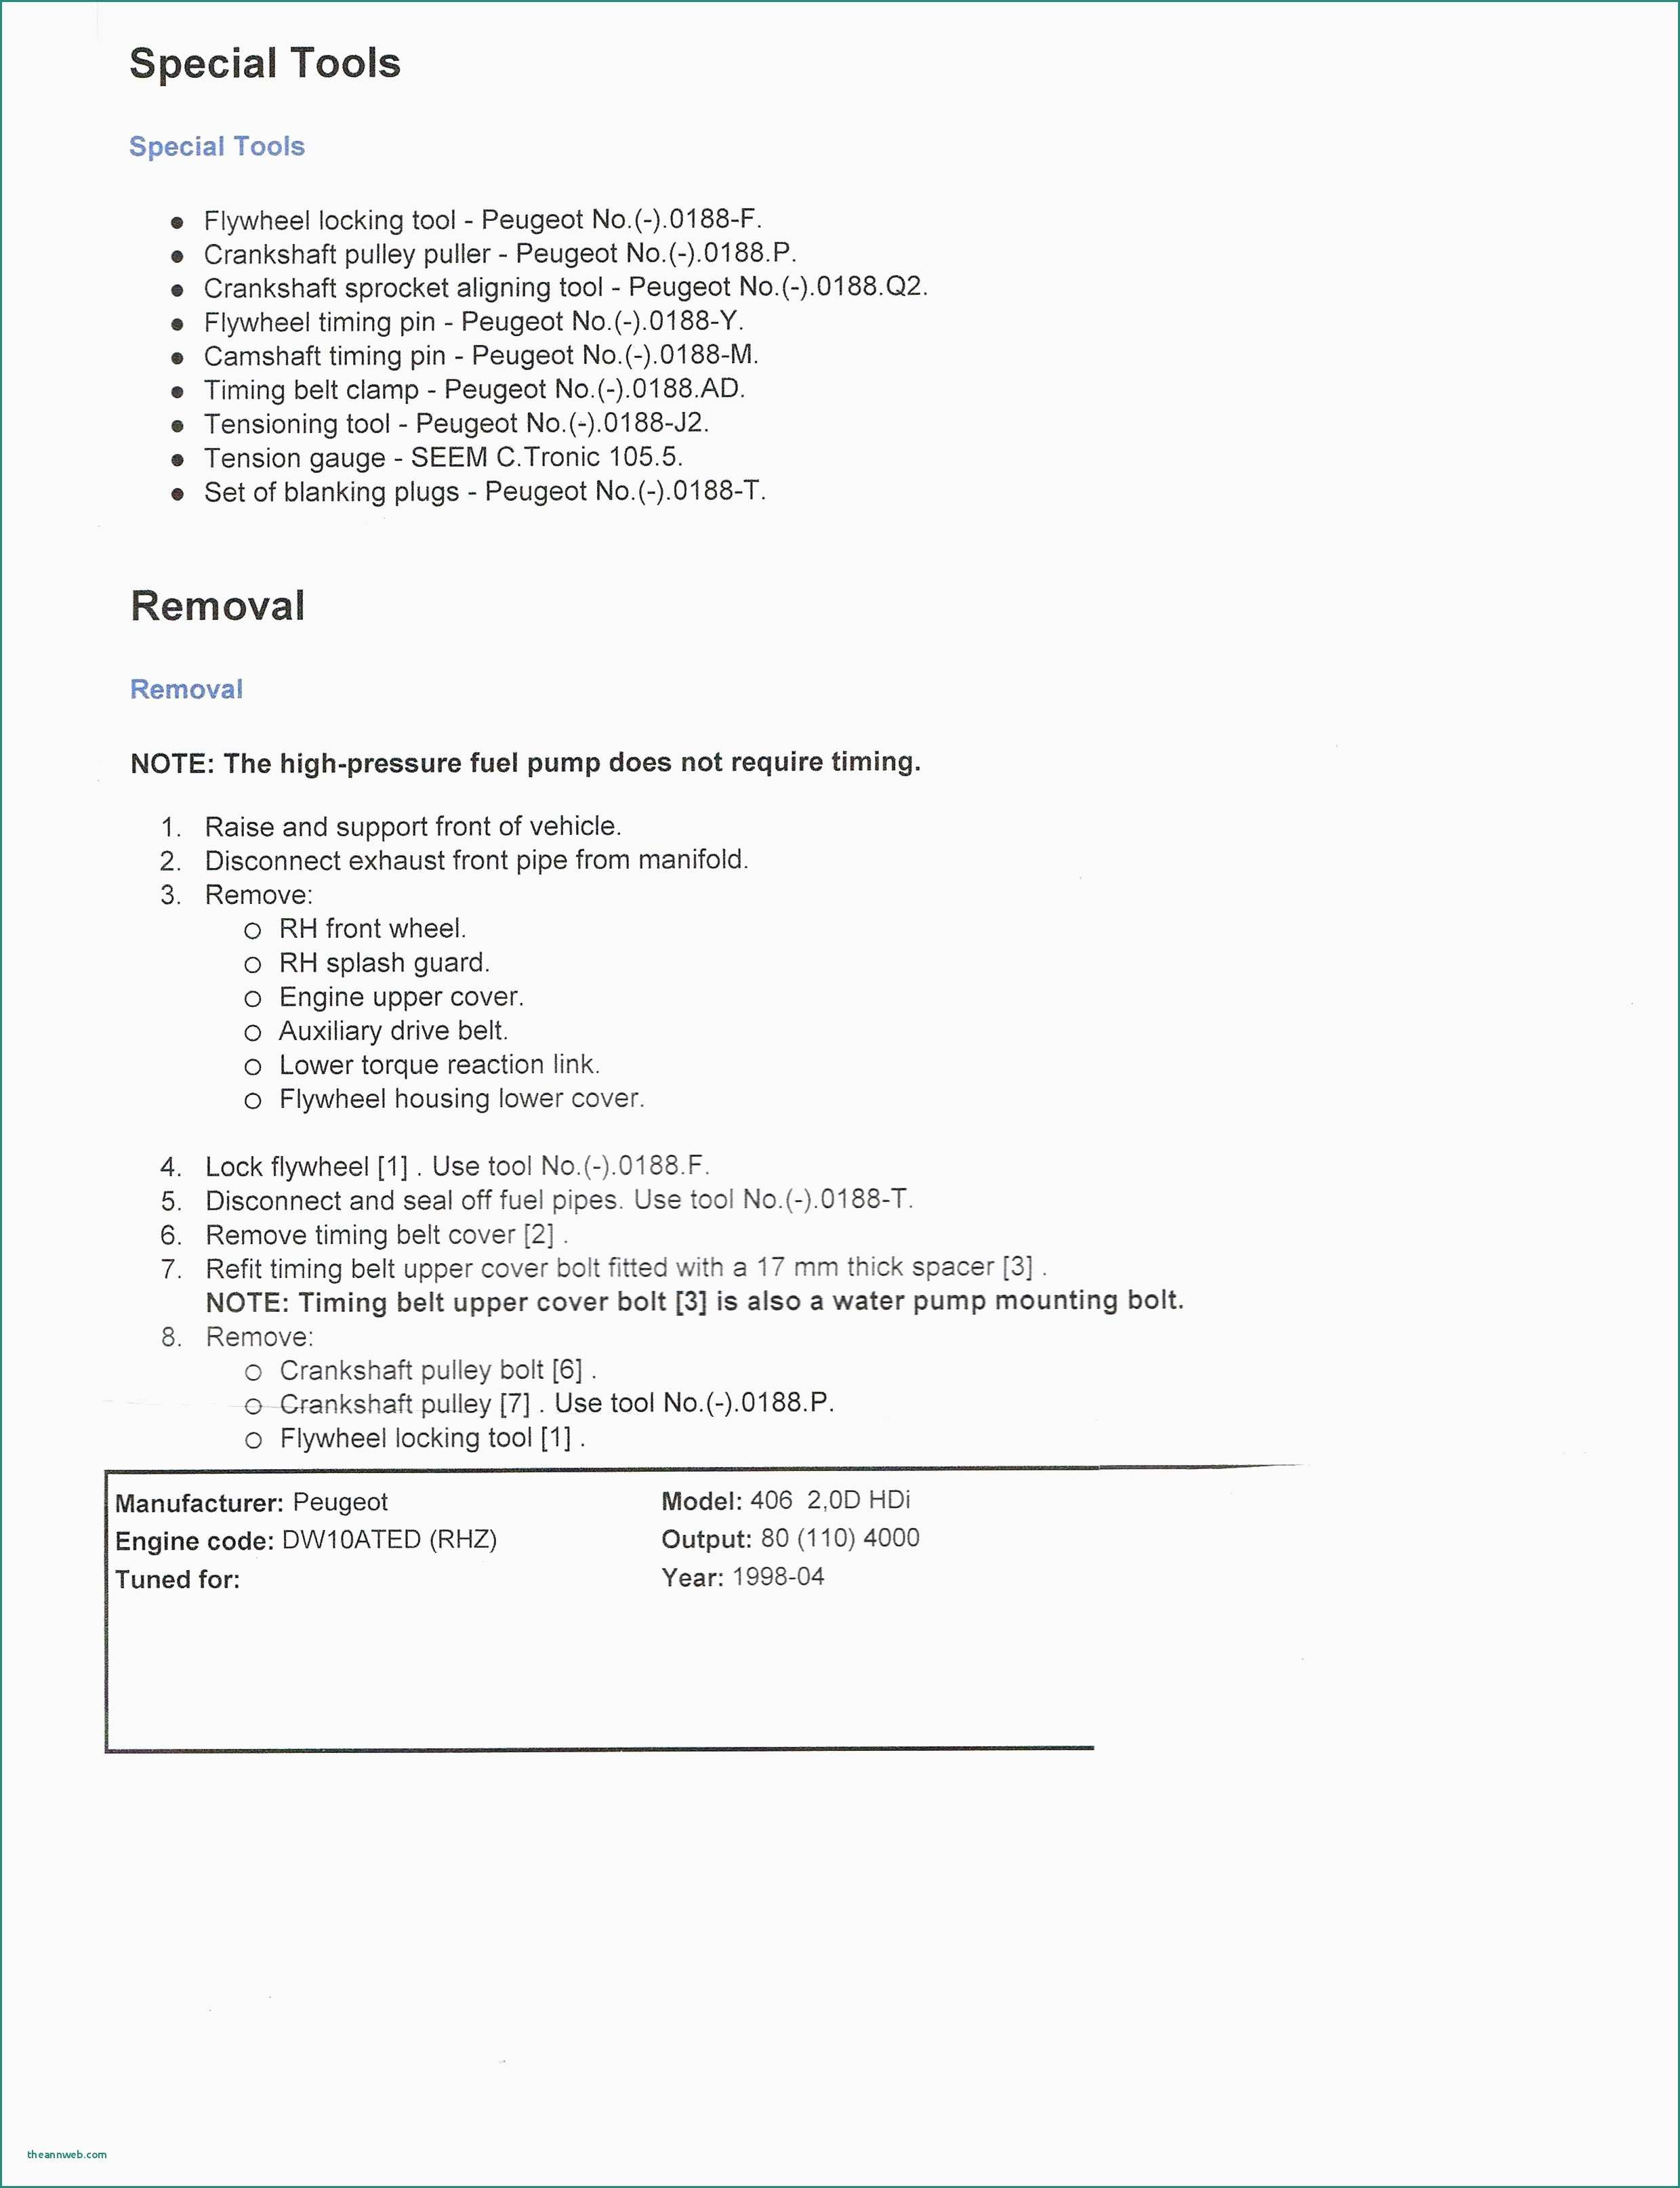 Sample Nursing Resume Resume For Nursing Student Best Sample Nursing Student Resume Example Nursing Resumes Sample Of Resume For Nursing Student sample nursing resume|wikiresume.com